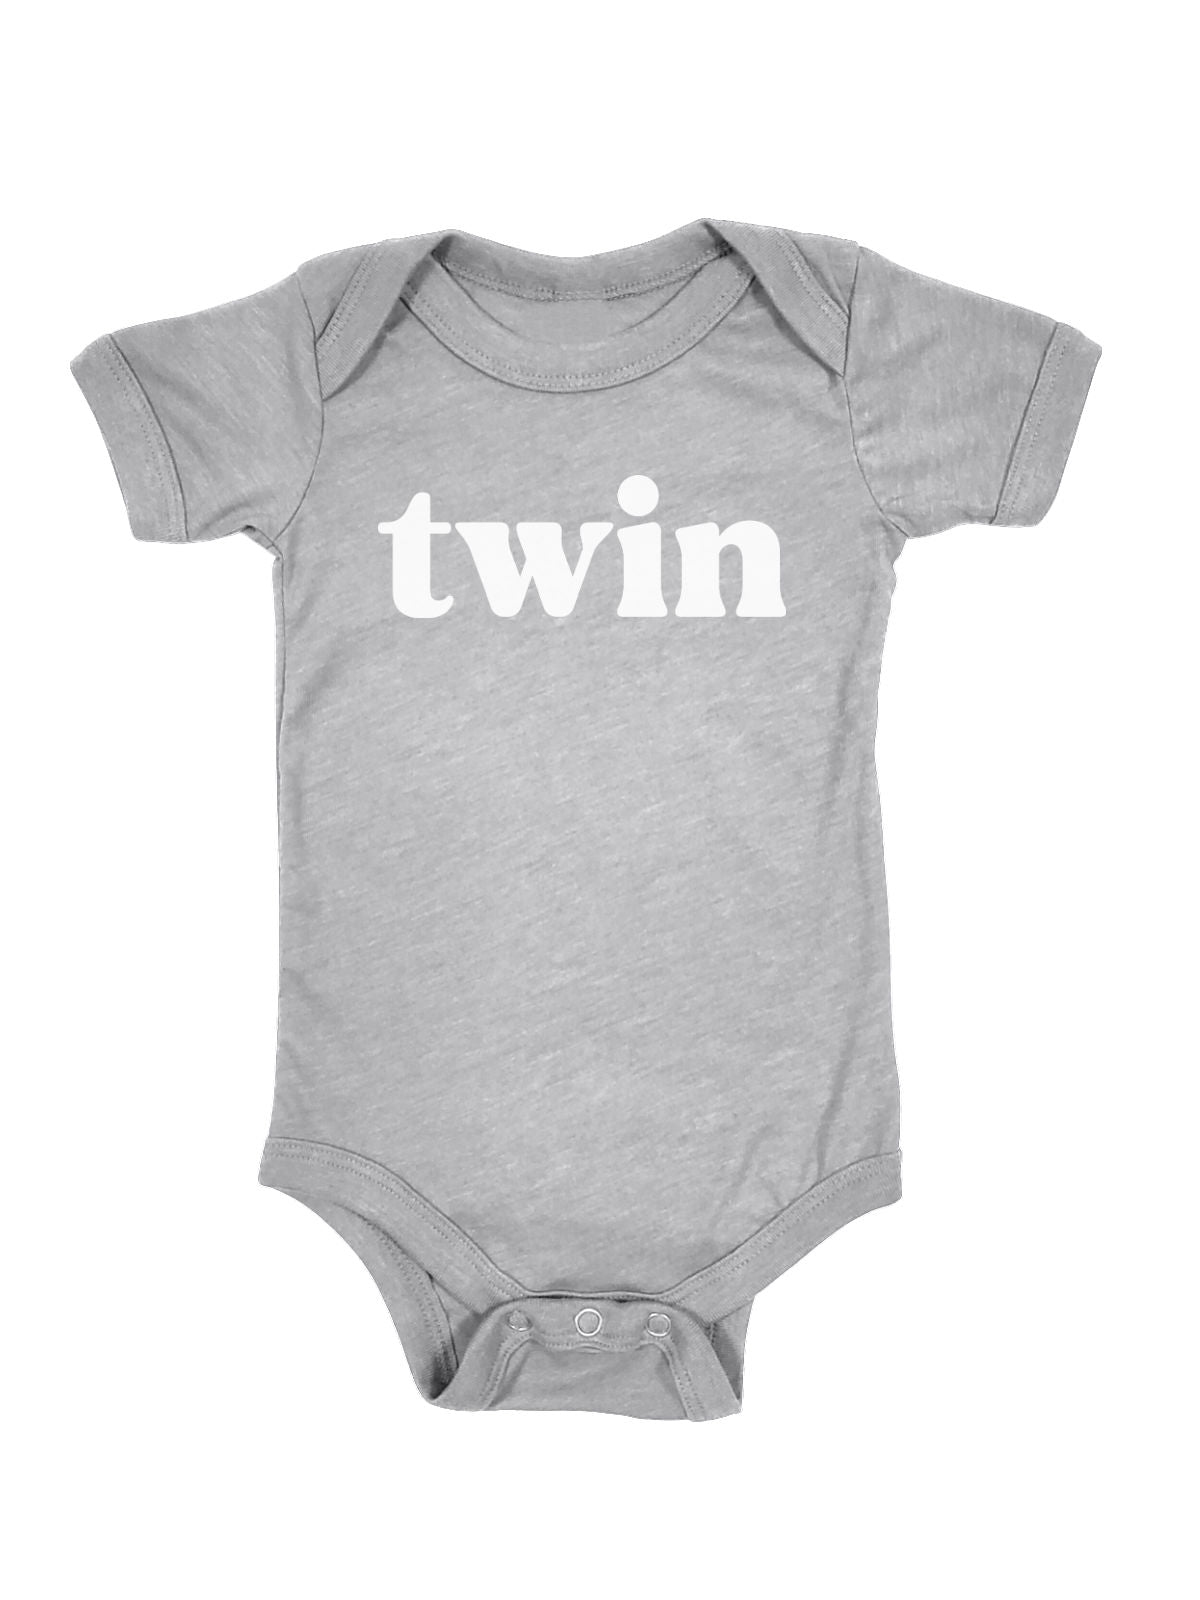 Twin Baby Bodysuit in Heather Gray